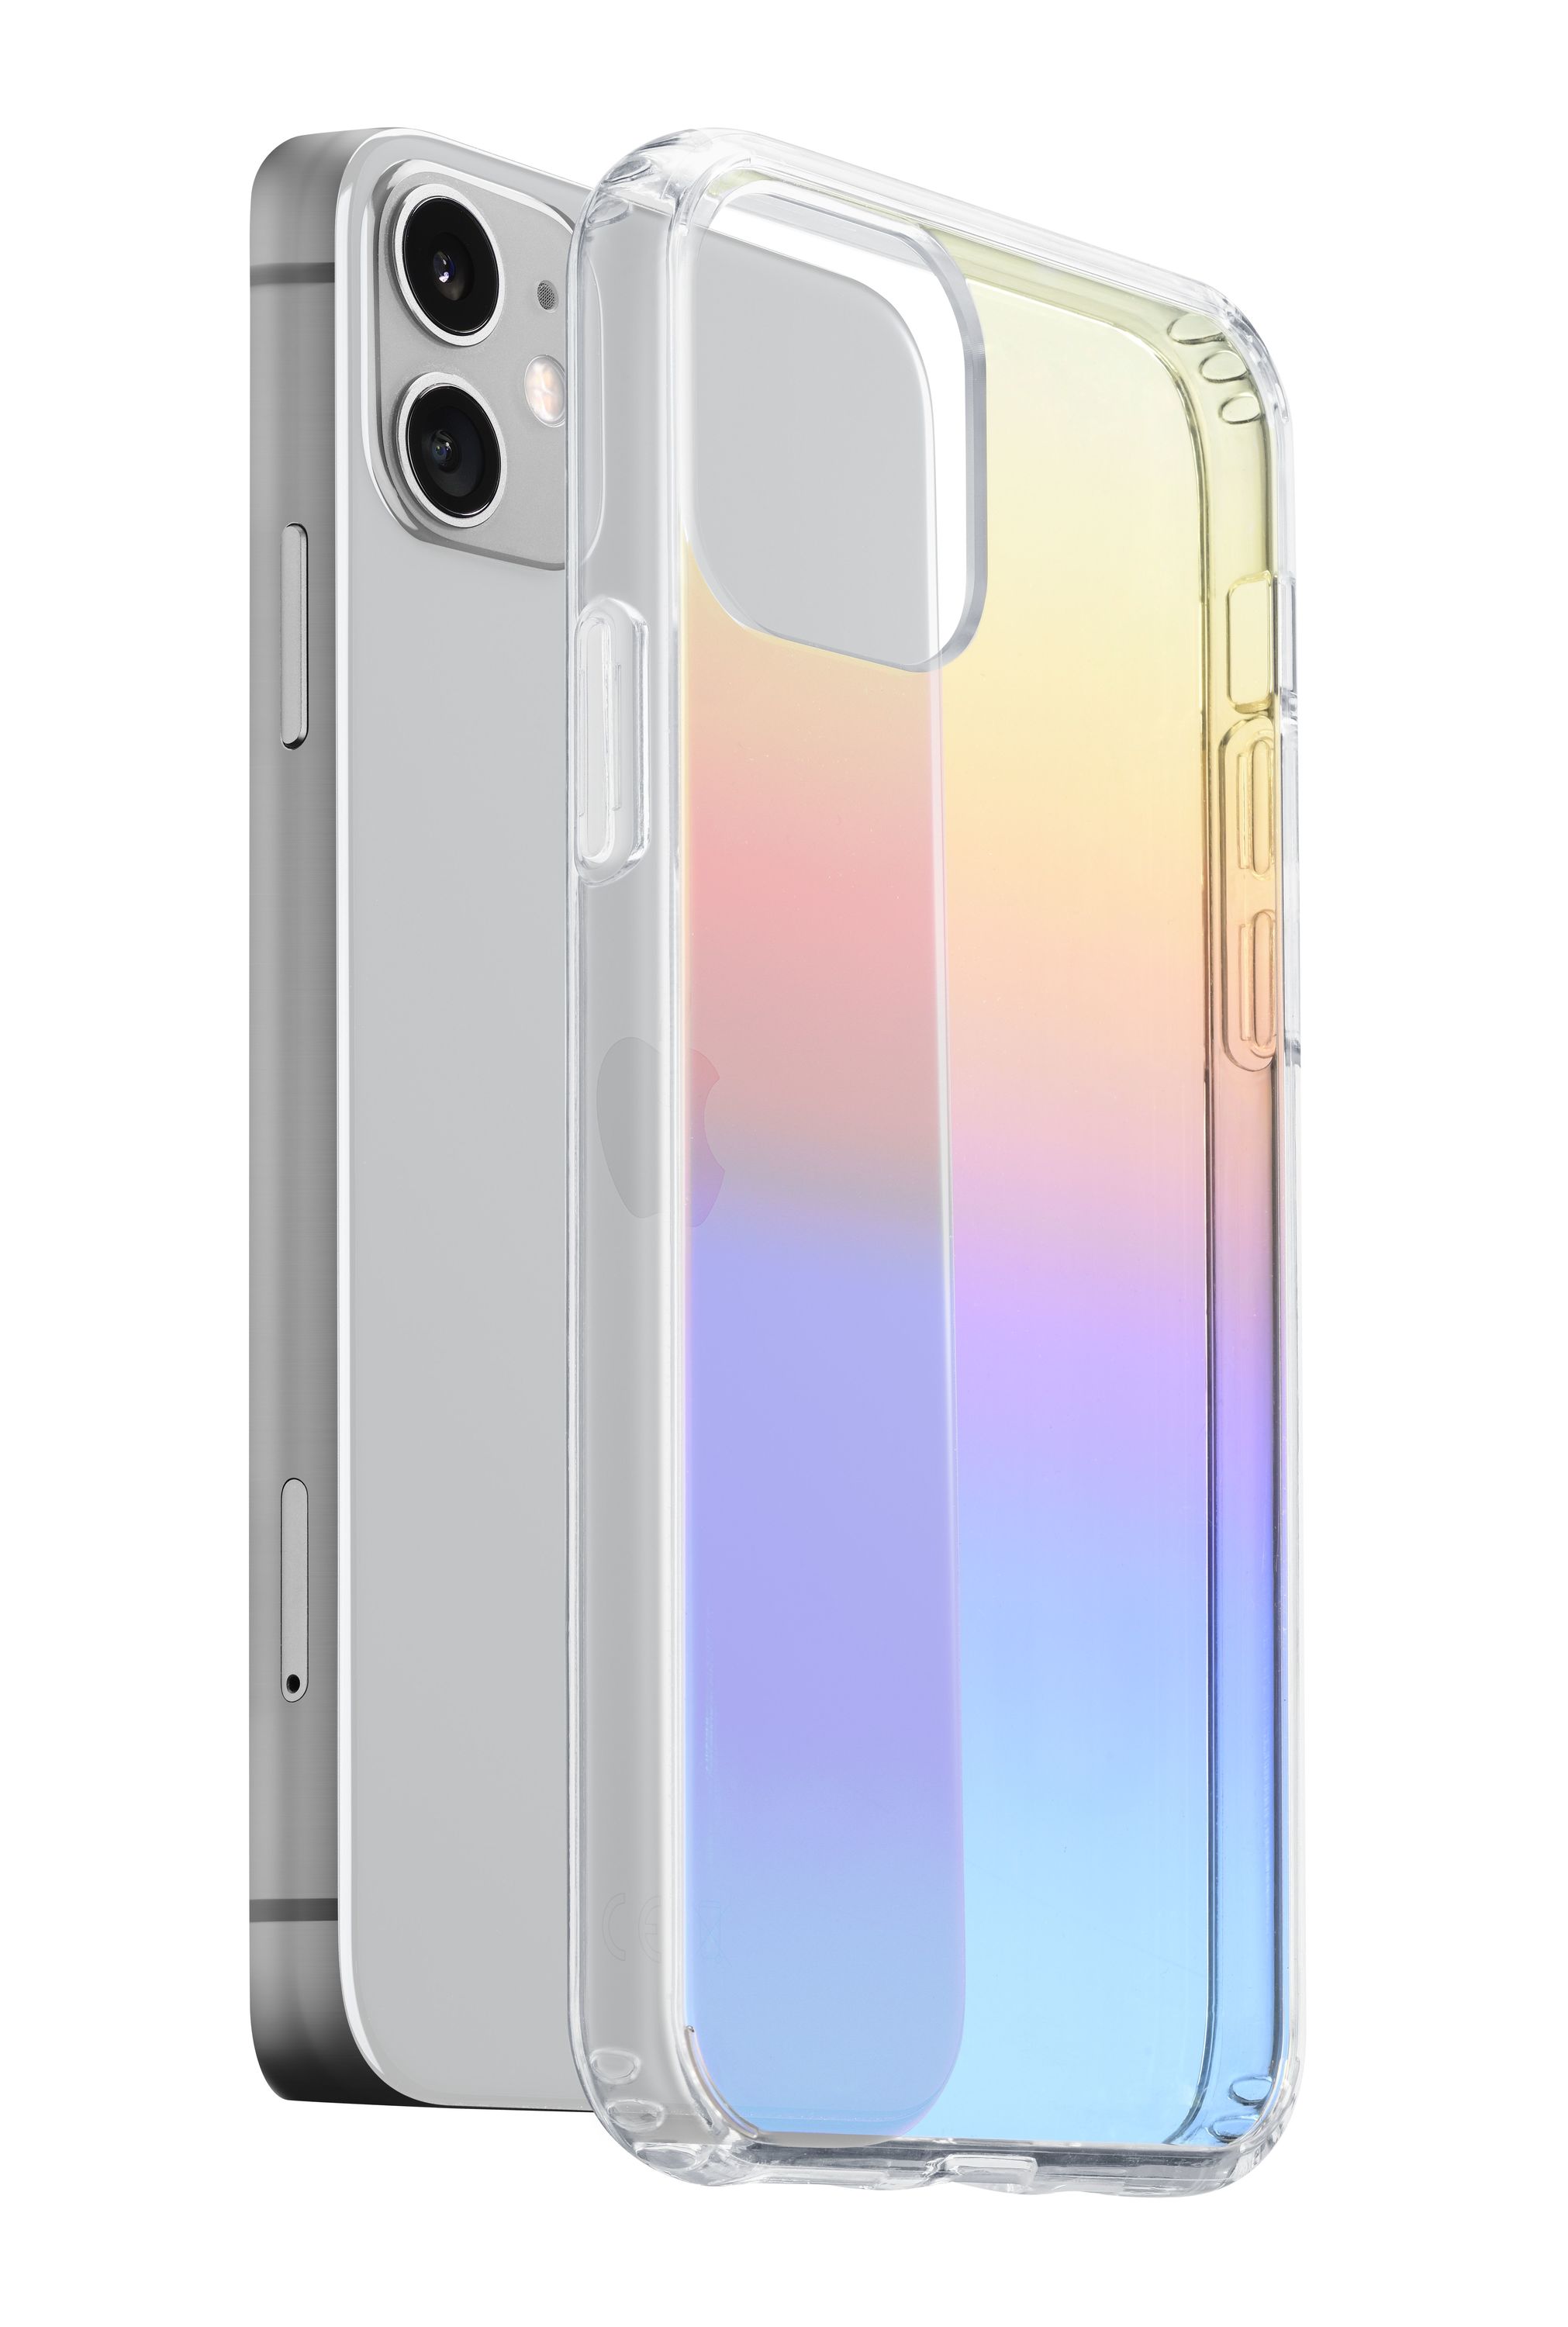 Prisma - iPhone 12 mini | Smartphone cases | Protection and Style |  CellularLine Site DE